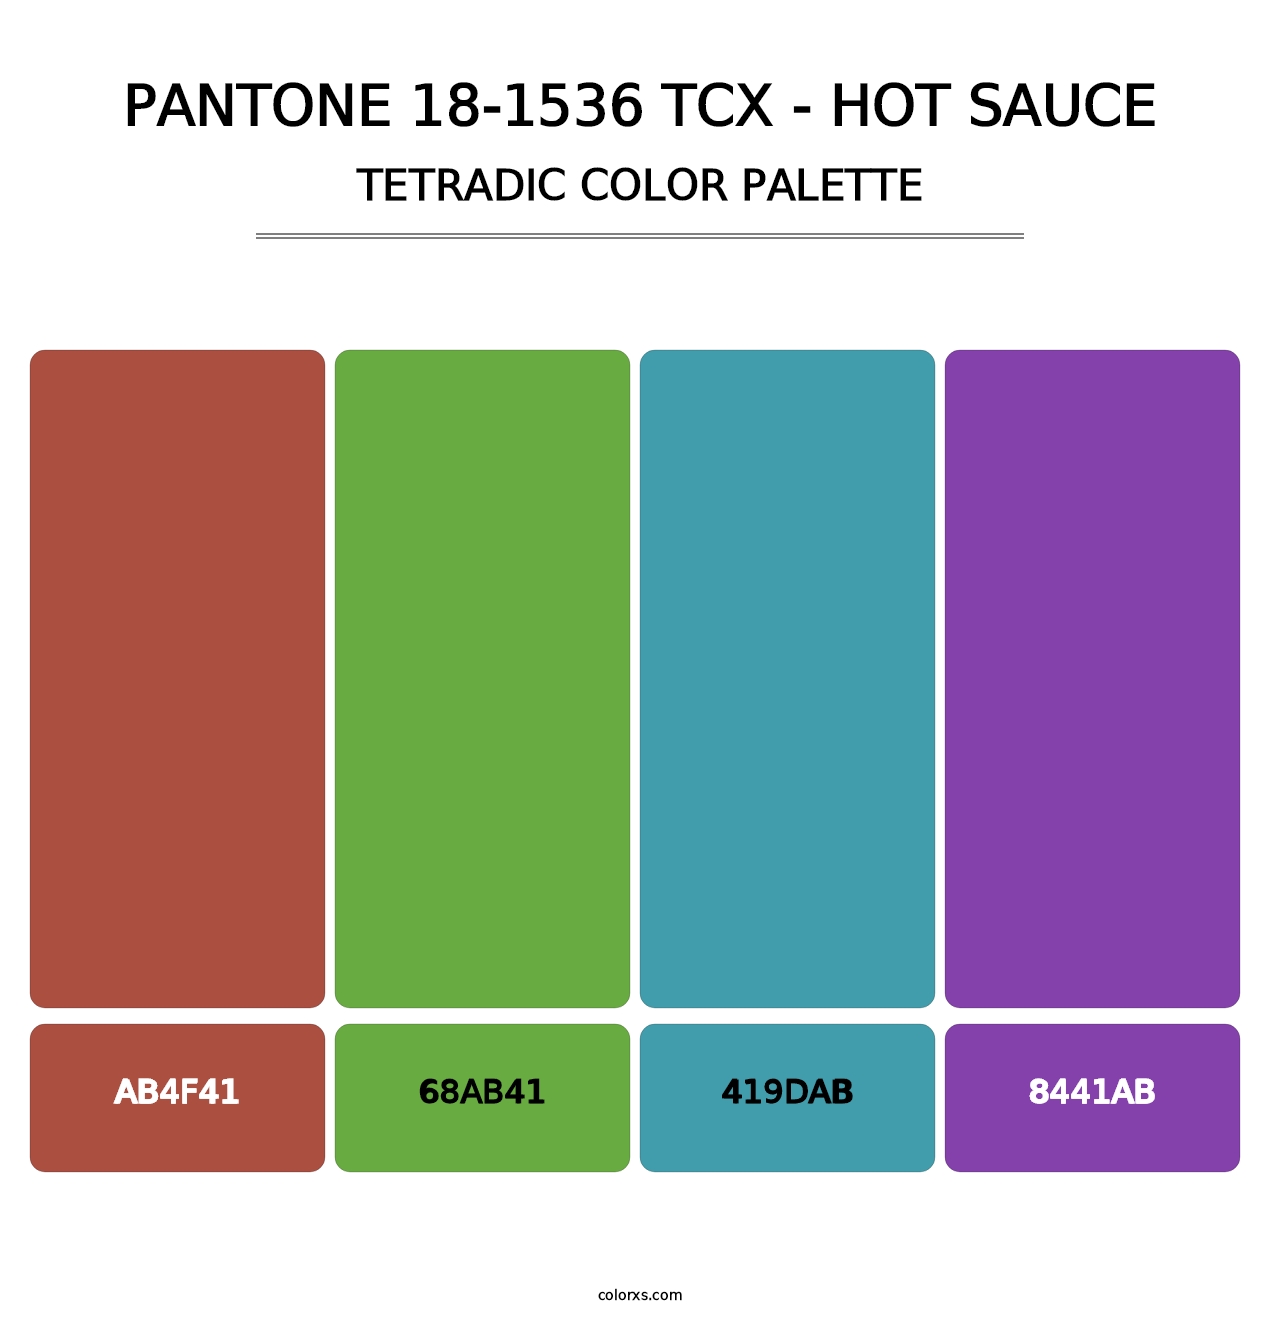 PANTONE 18-1536 TCX - Hot Sauce - Tetradic Color Palette